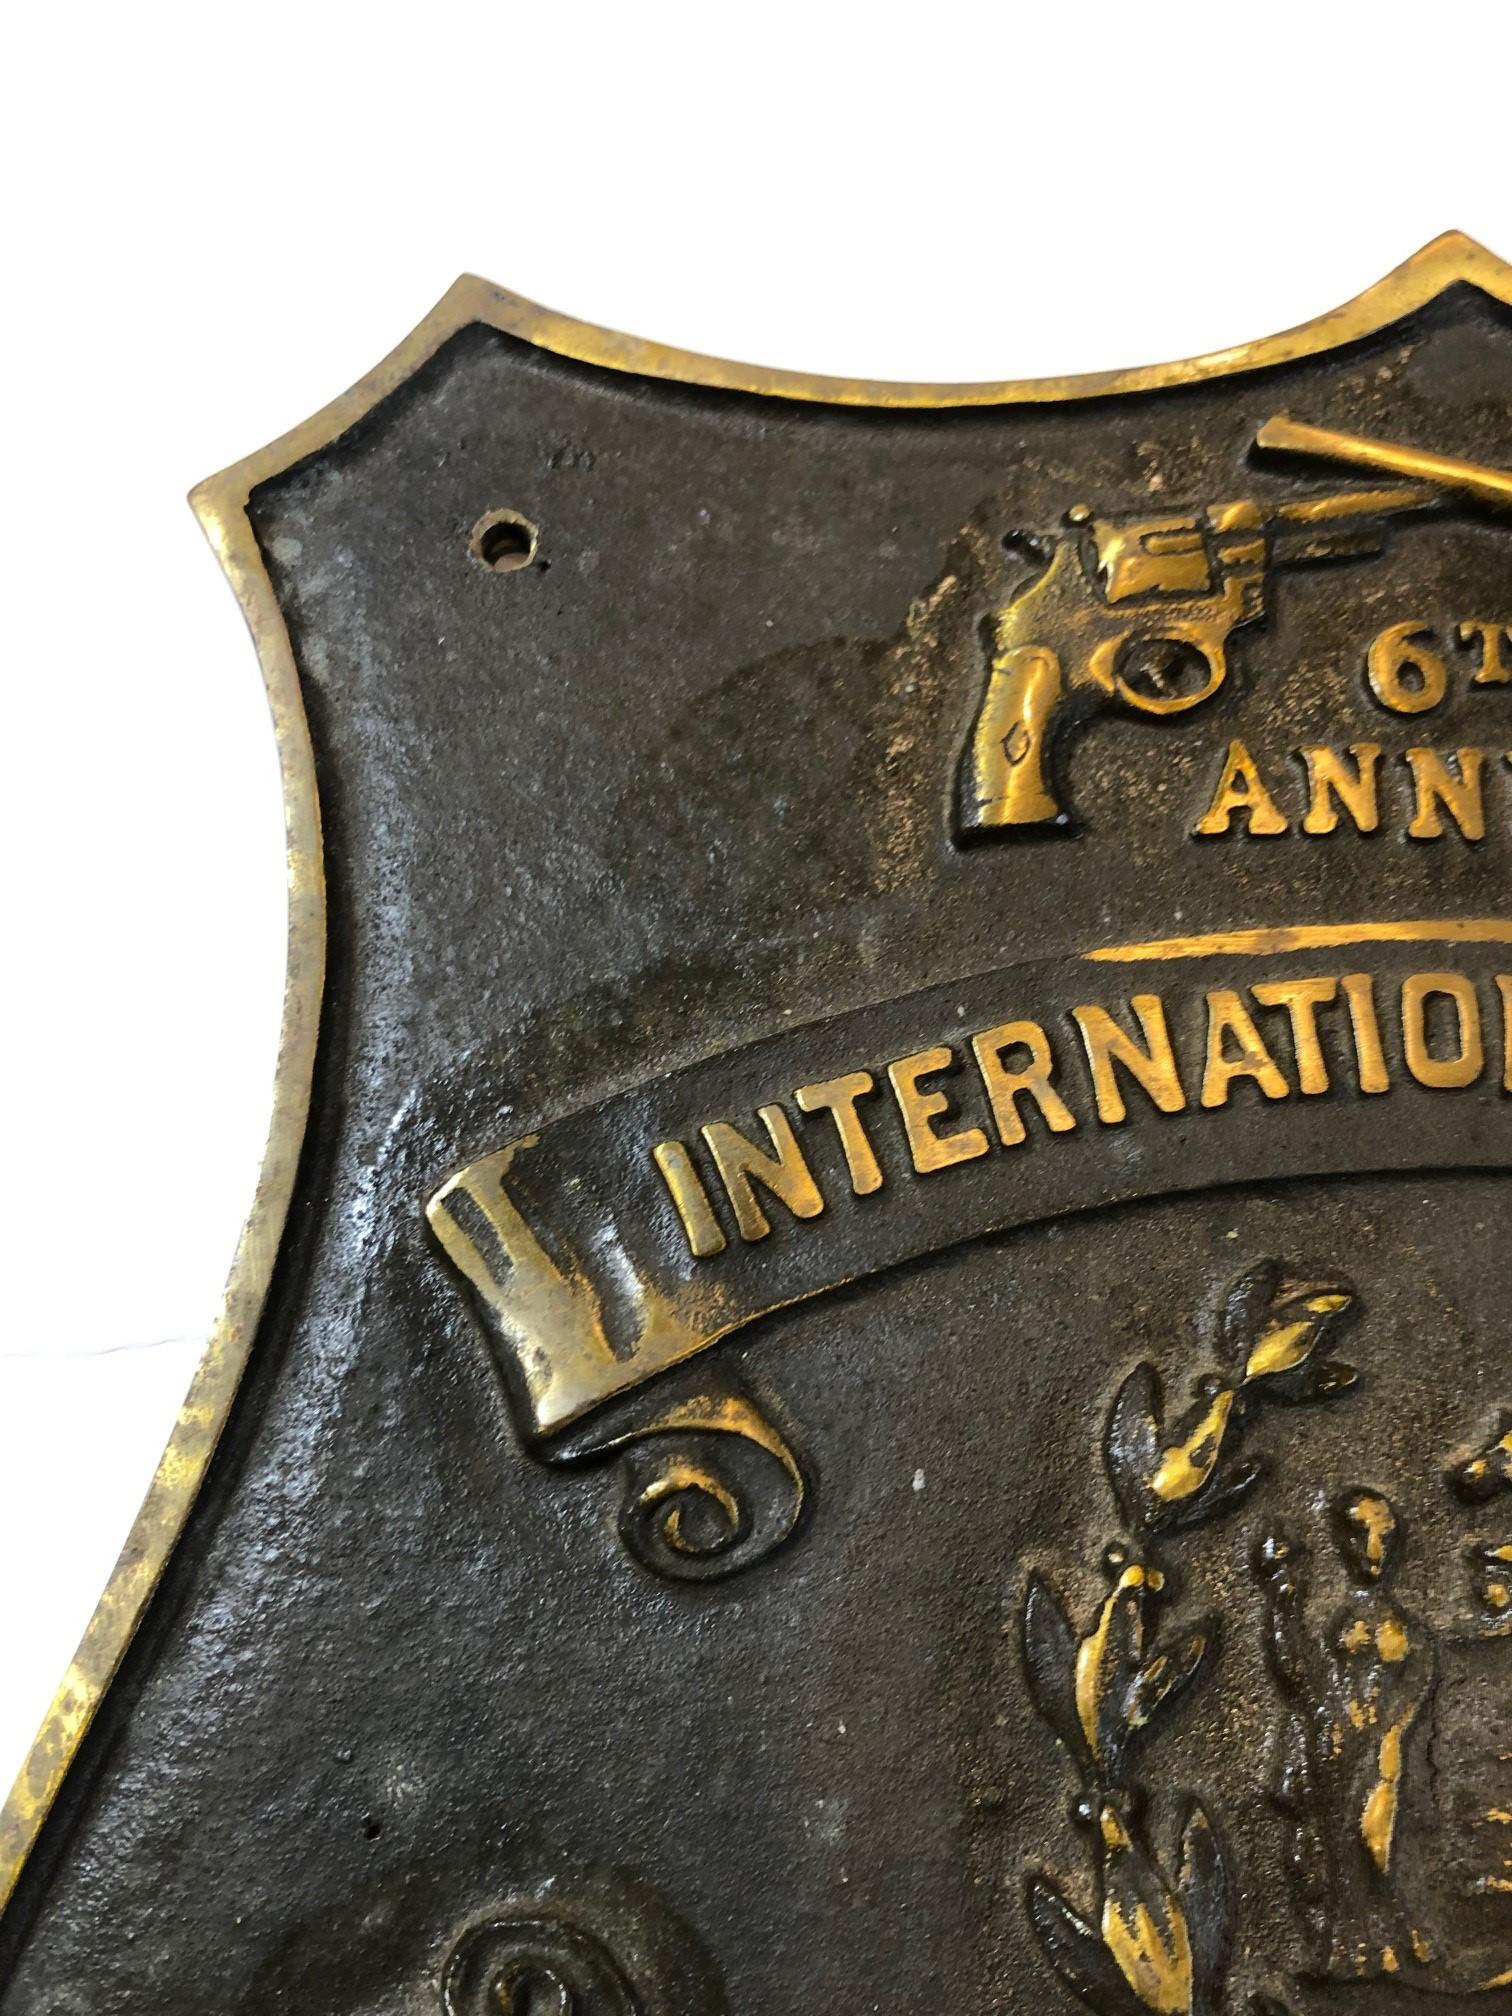 American Bronze Plaque 1937 6th Annual International Police Pistol Tournament Teaneck NJ.